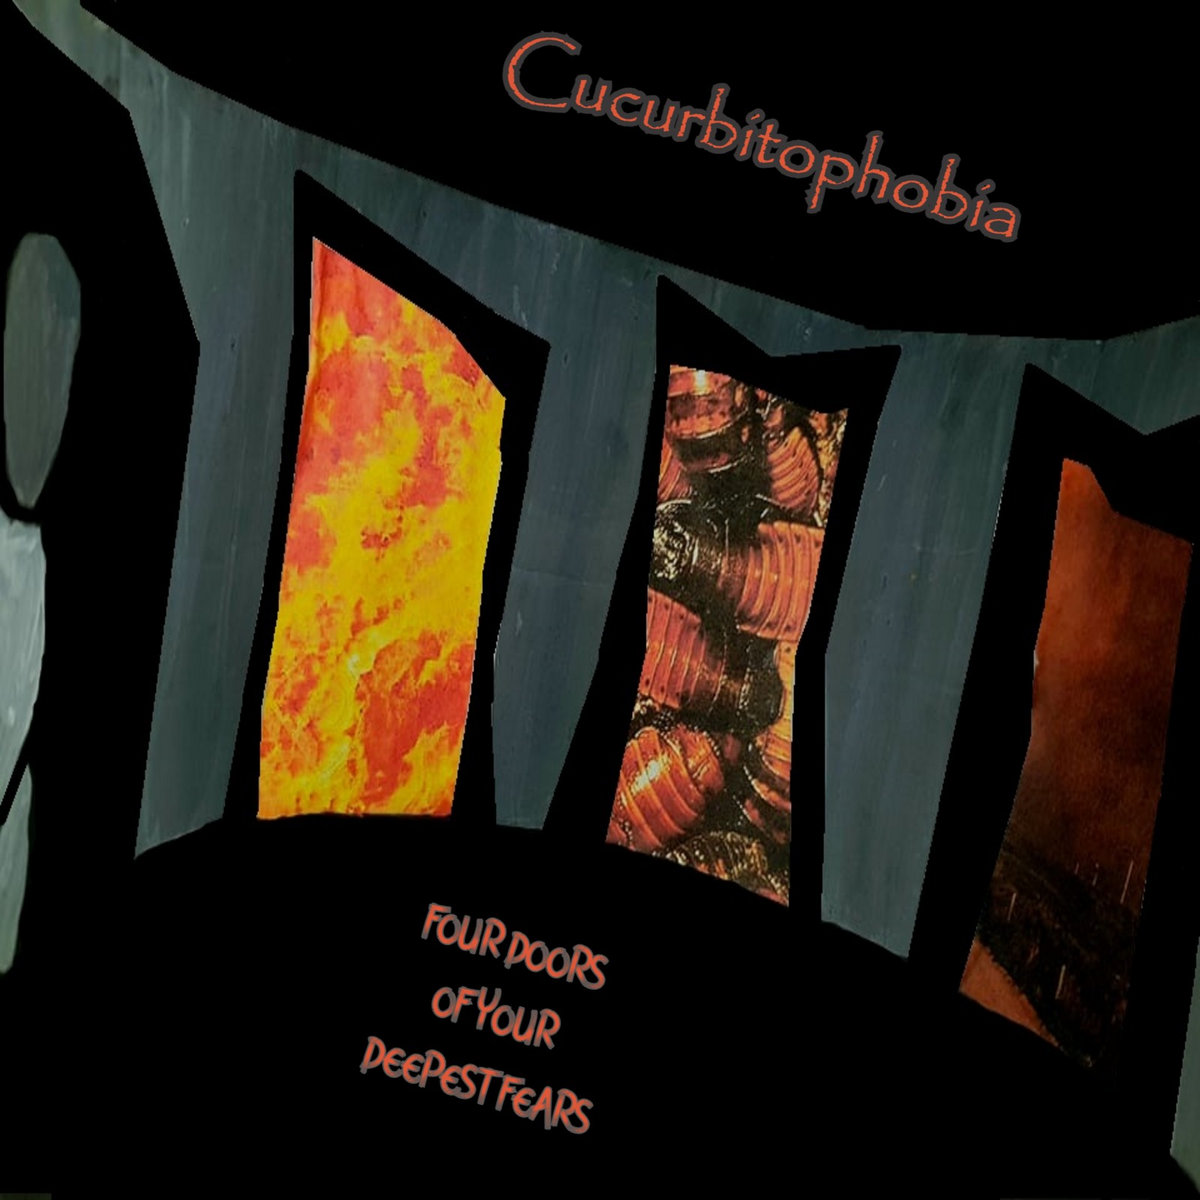 tbm horror - horror music - four doors - cucurbitophobia - 1